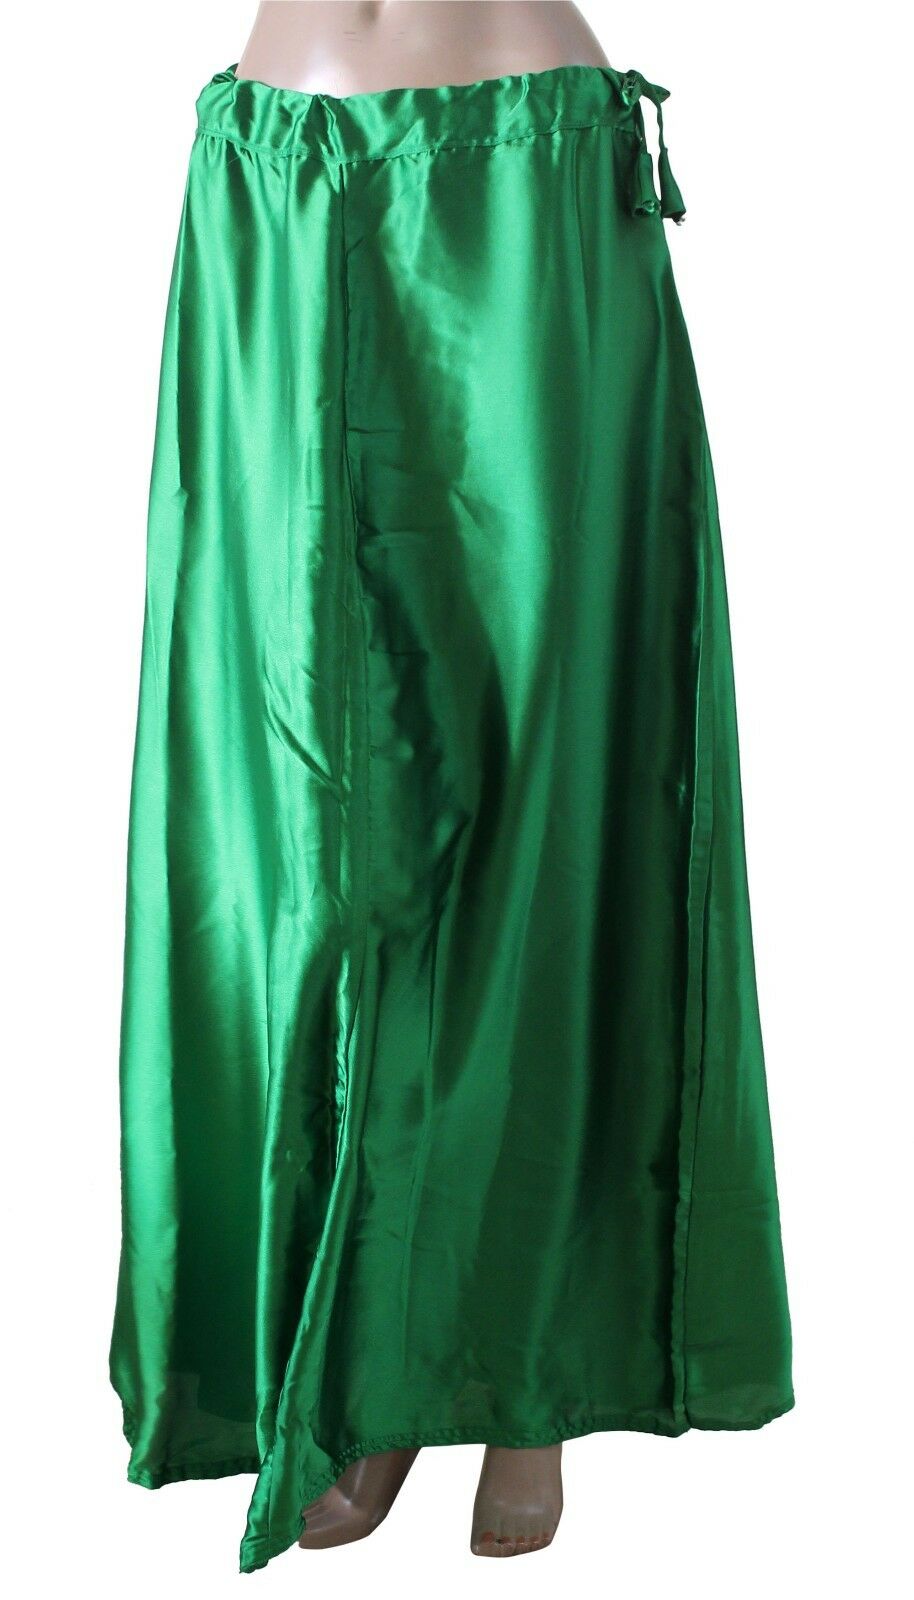 Green soft satin skirt Saree Sari Petticoat Underskirt